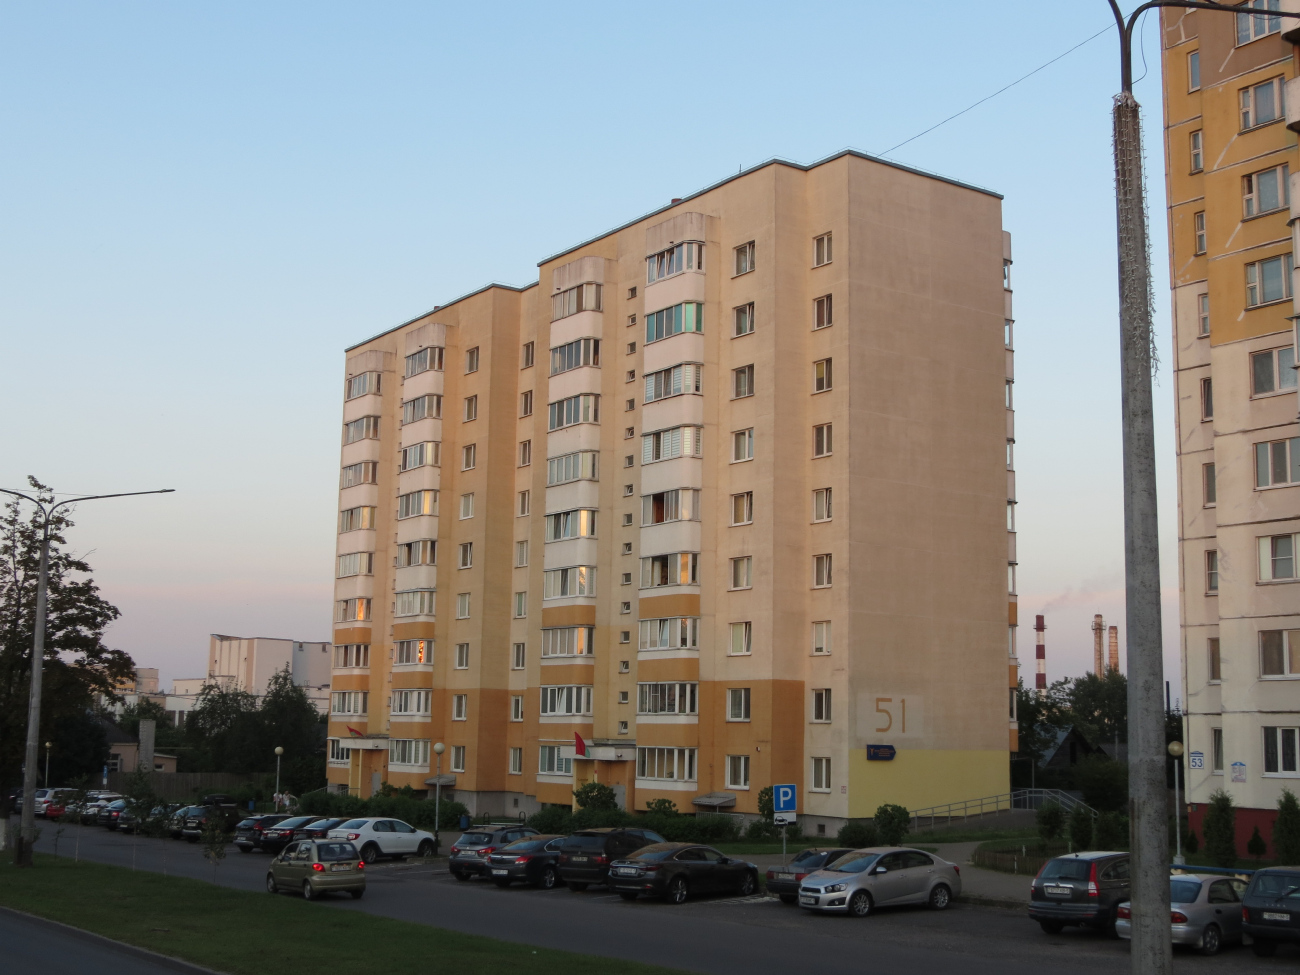 Борисов, Улица Орджоникидзе, 51